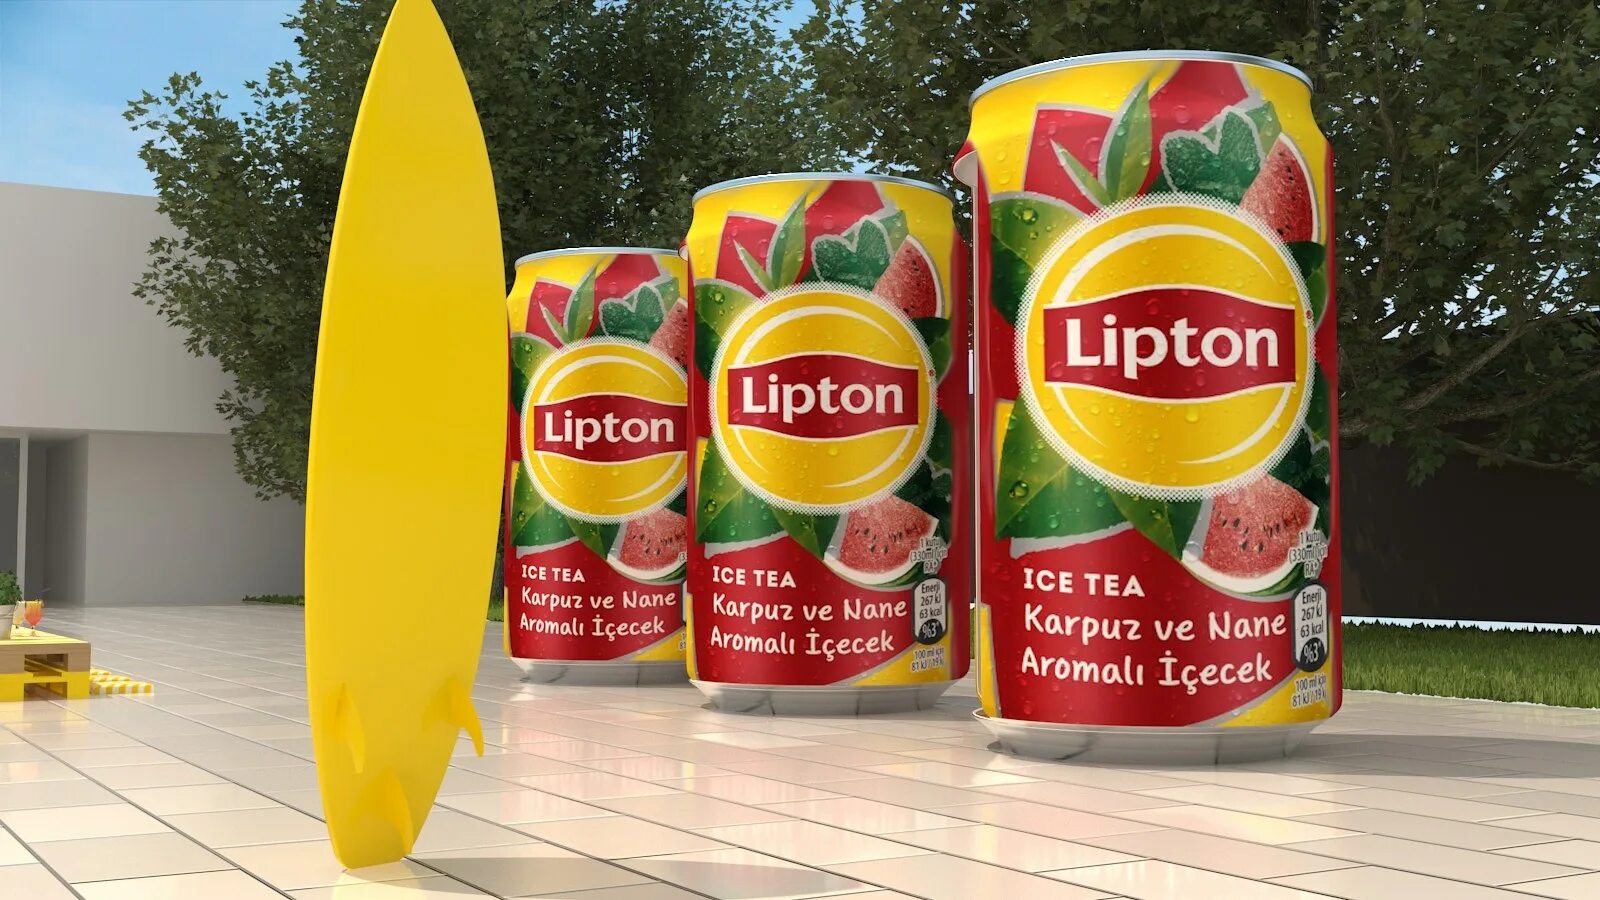 Липтон большой. Липтон зелёный холодный чай Эстетика. Эстетика ЛИПТОНА. Липтон 2000. Липтон холодный чай арт спецвыпуск.